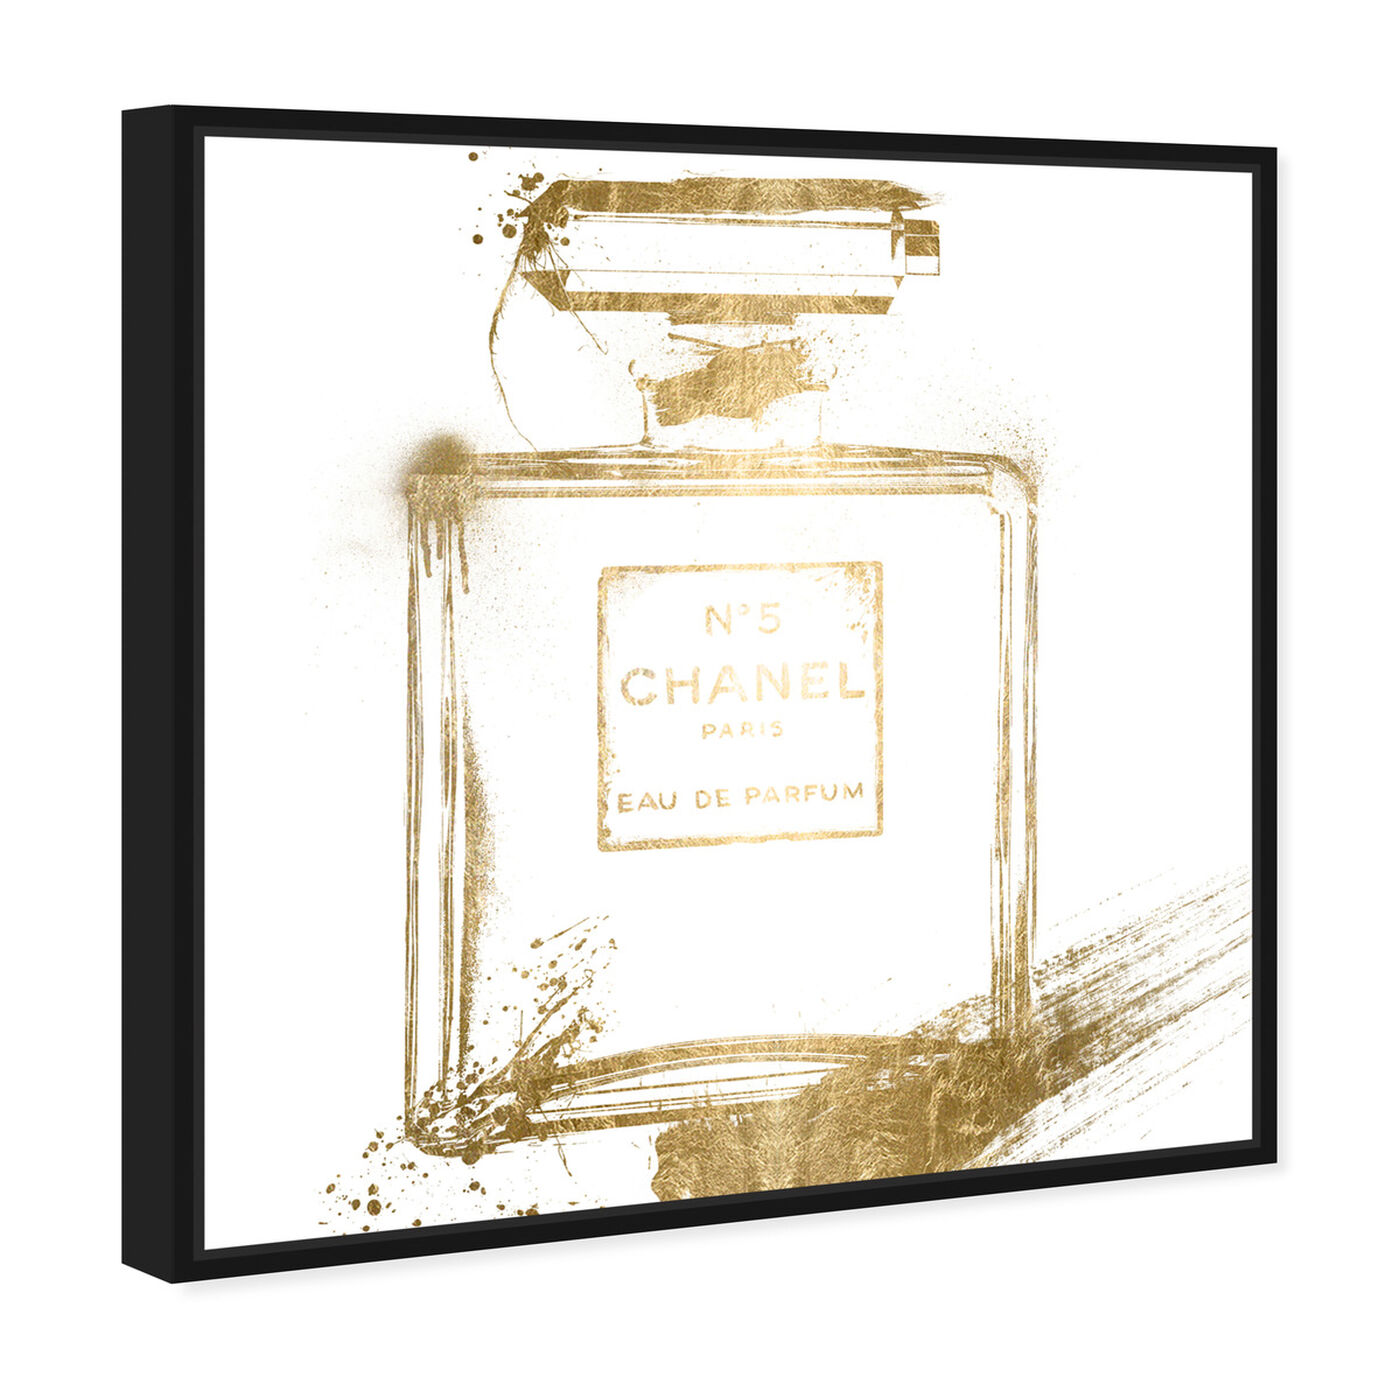 Oliver Gal 'Perfume Paris Sketch' Fashion and Glam Wall Art Canvas Print  Perfumes - Black, White - Bed Bath & Beyond - 32195392